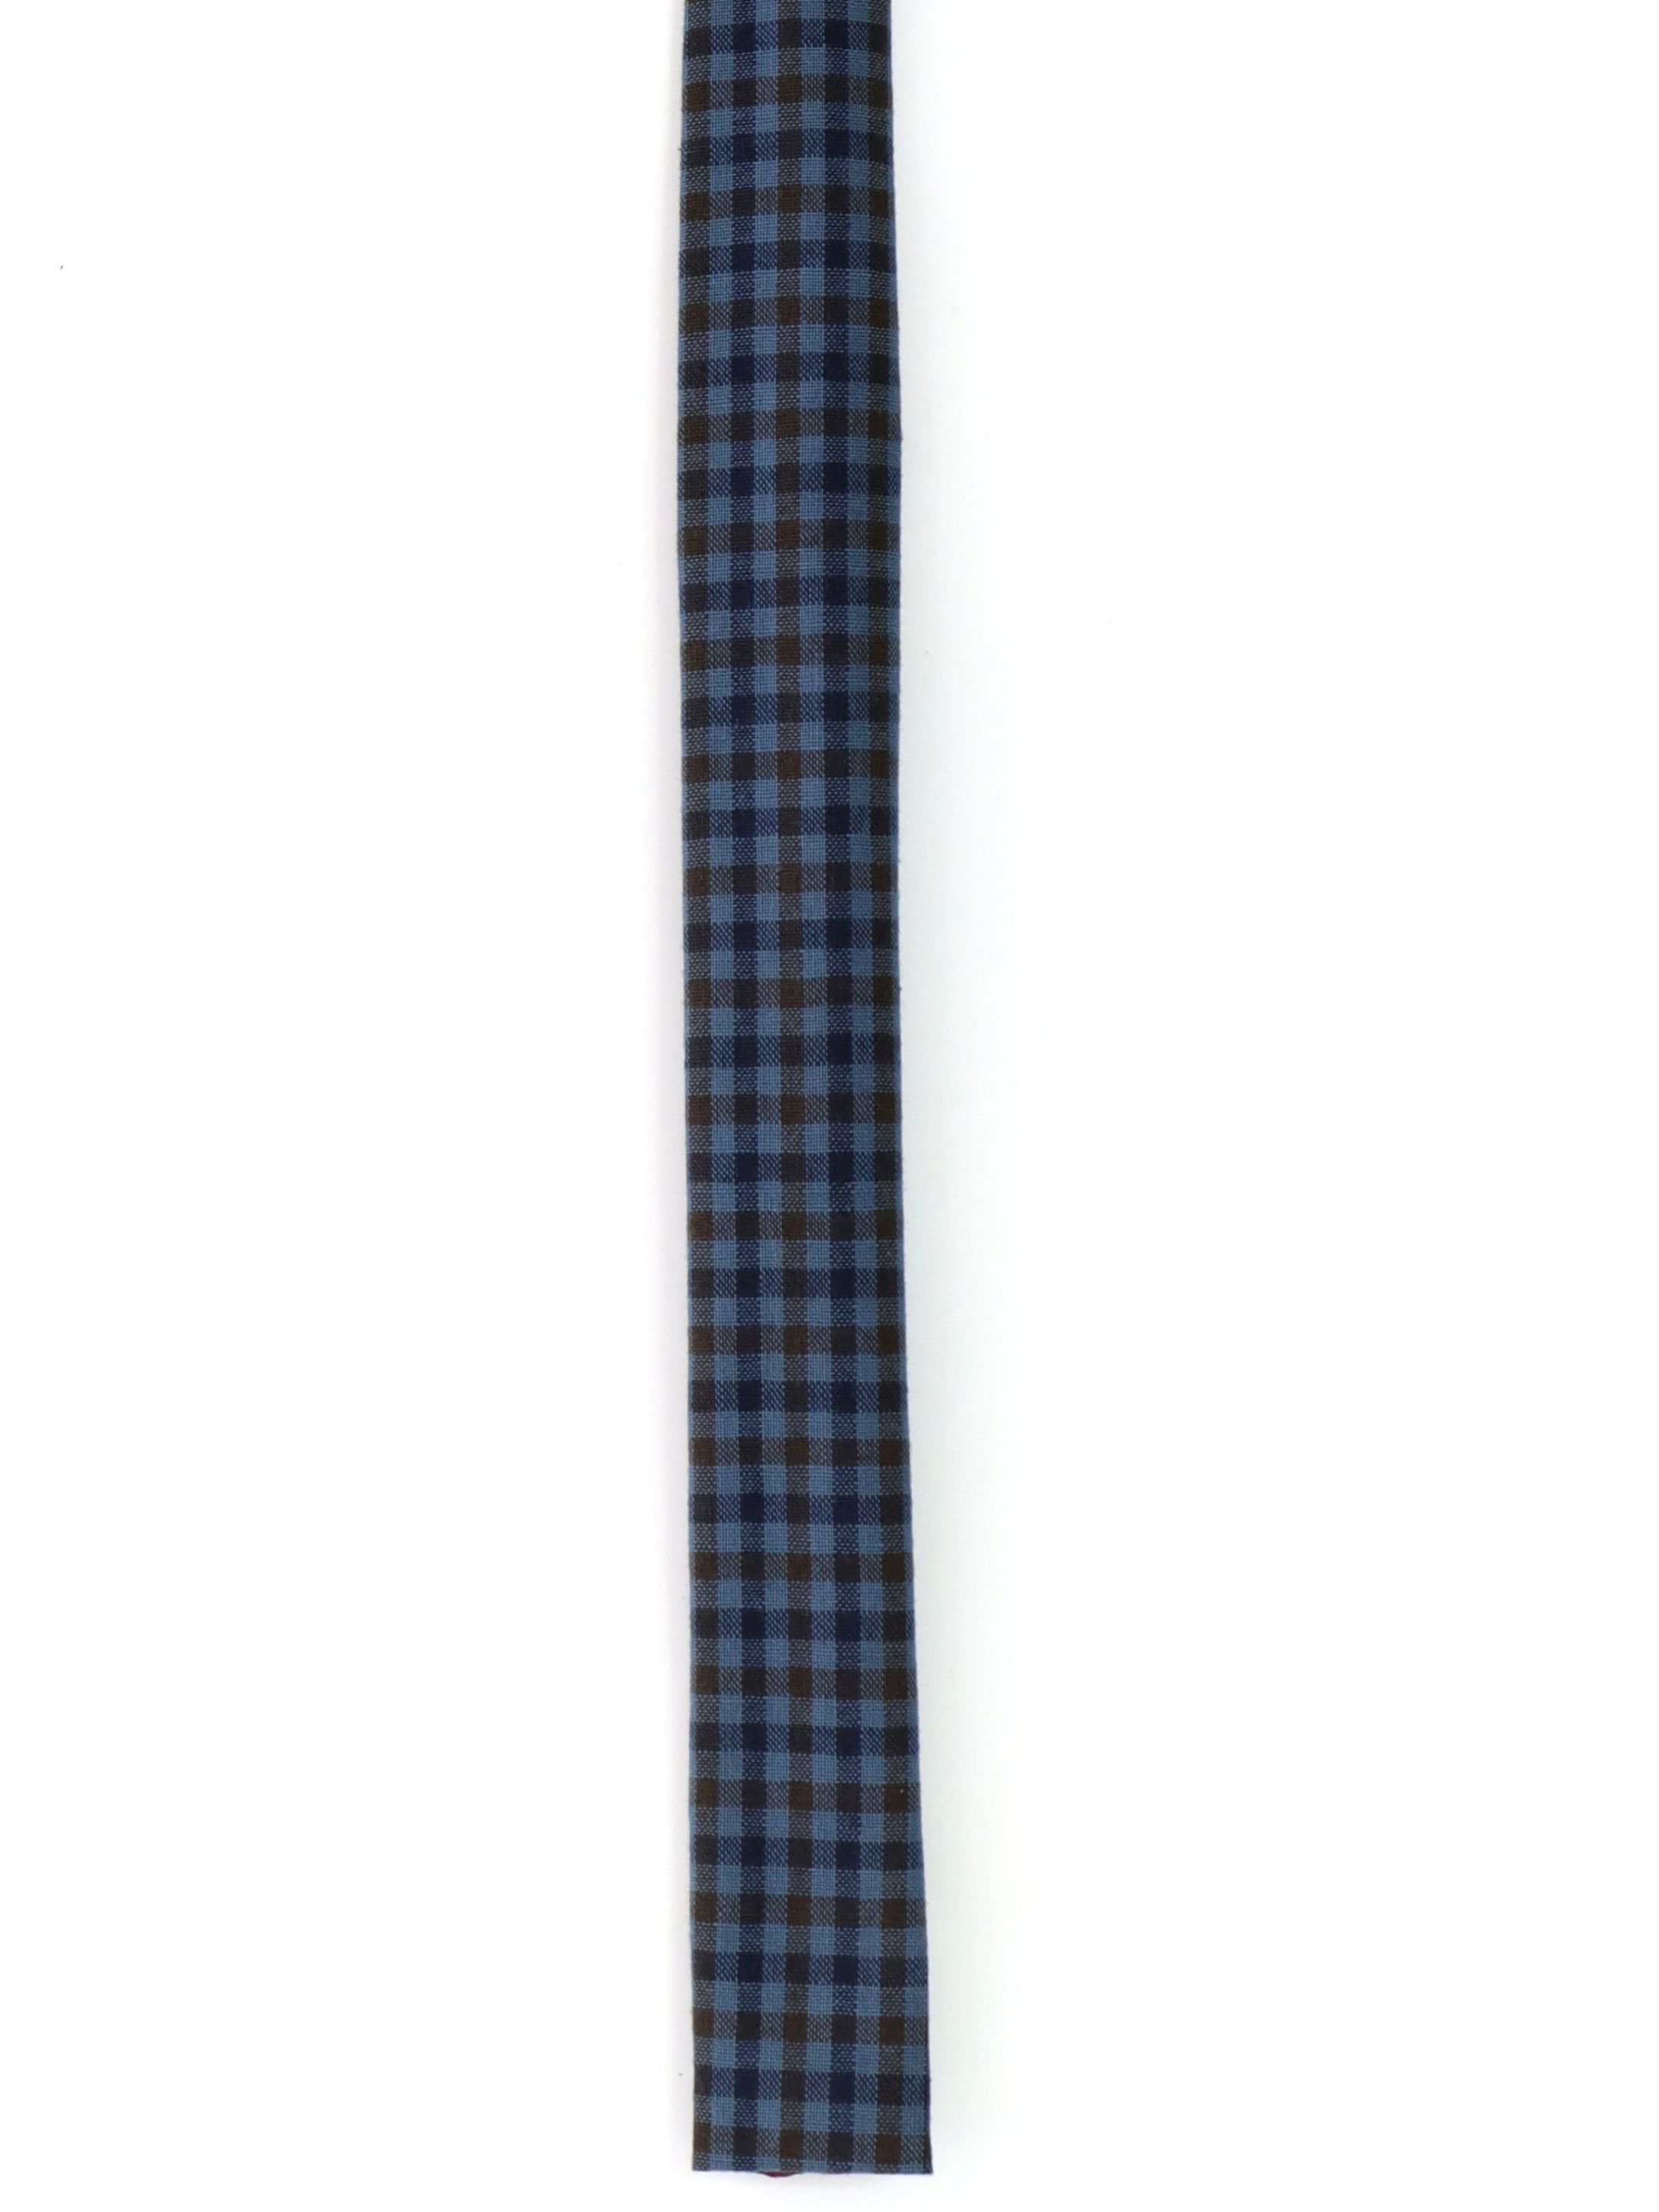 Vintage 1960's Neck Tie: 60s -Label Missing- Mens shades of blue